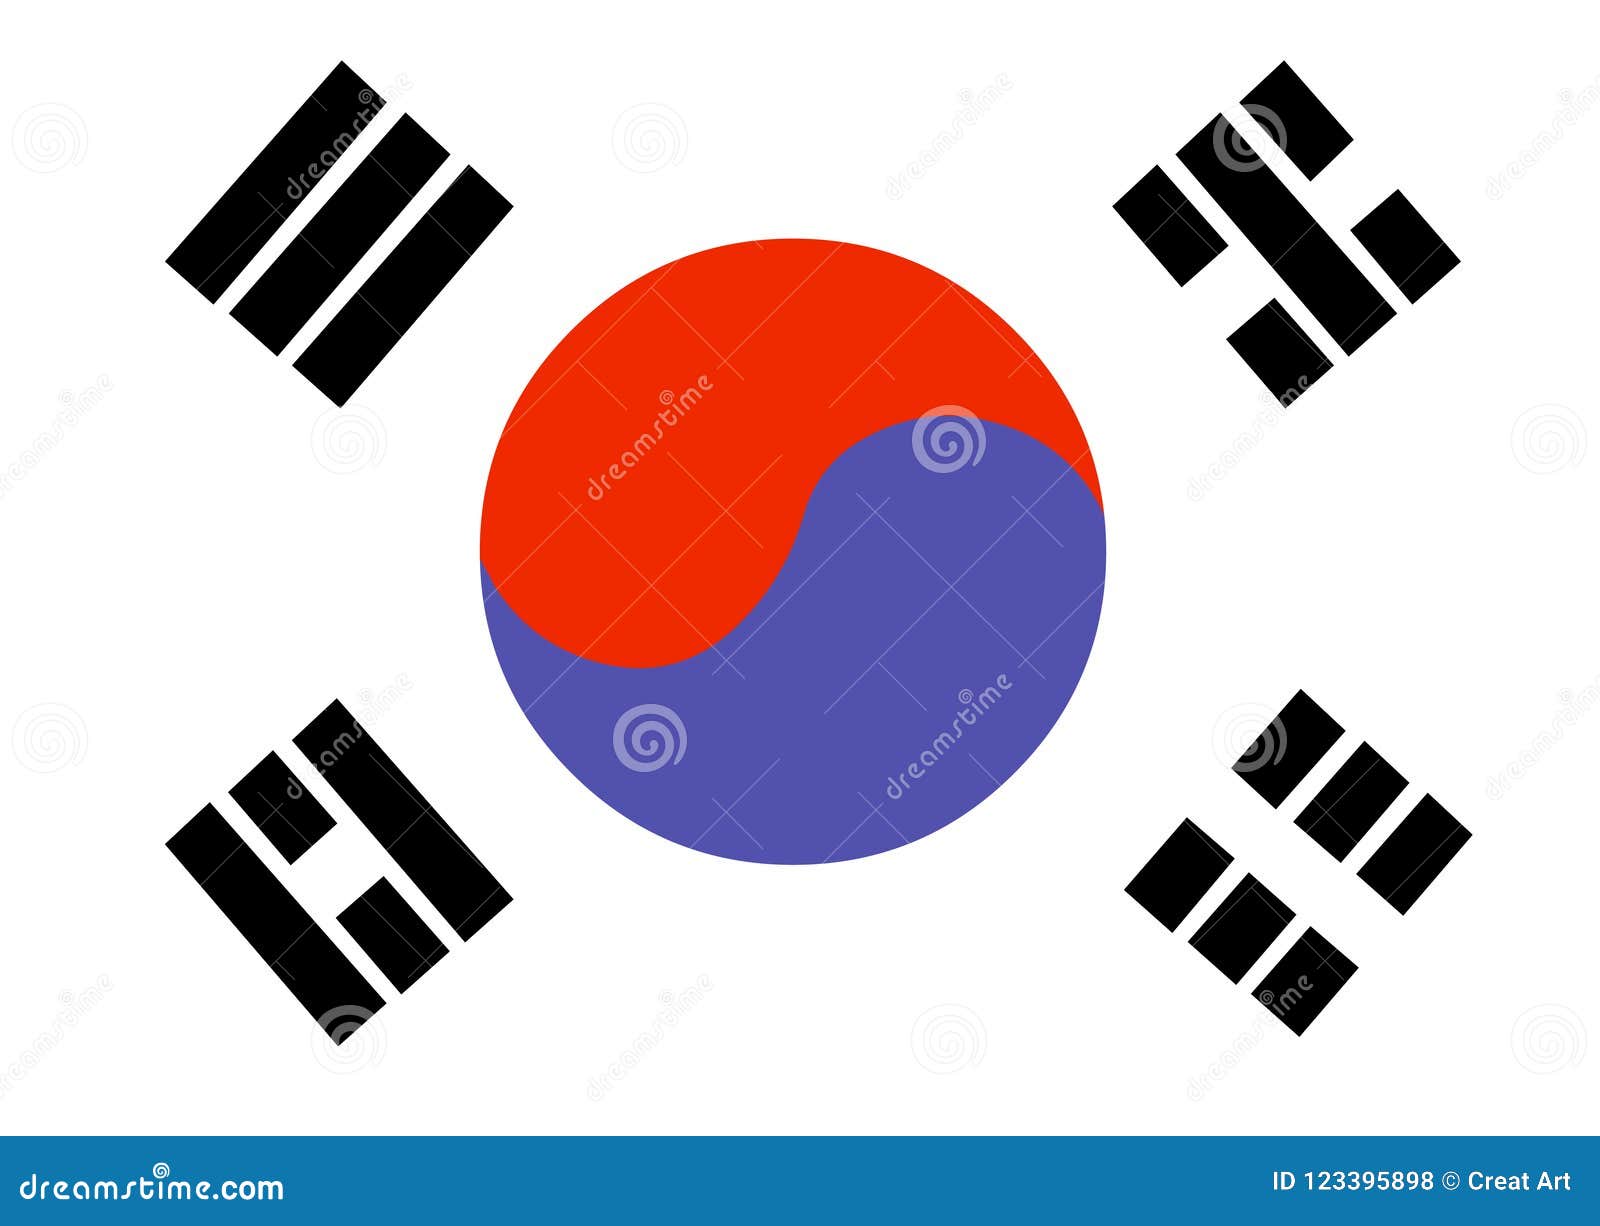 Download South Korea Flag Vector.Illustration Of South Korea Flag ...